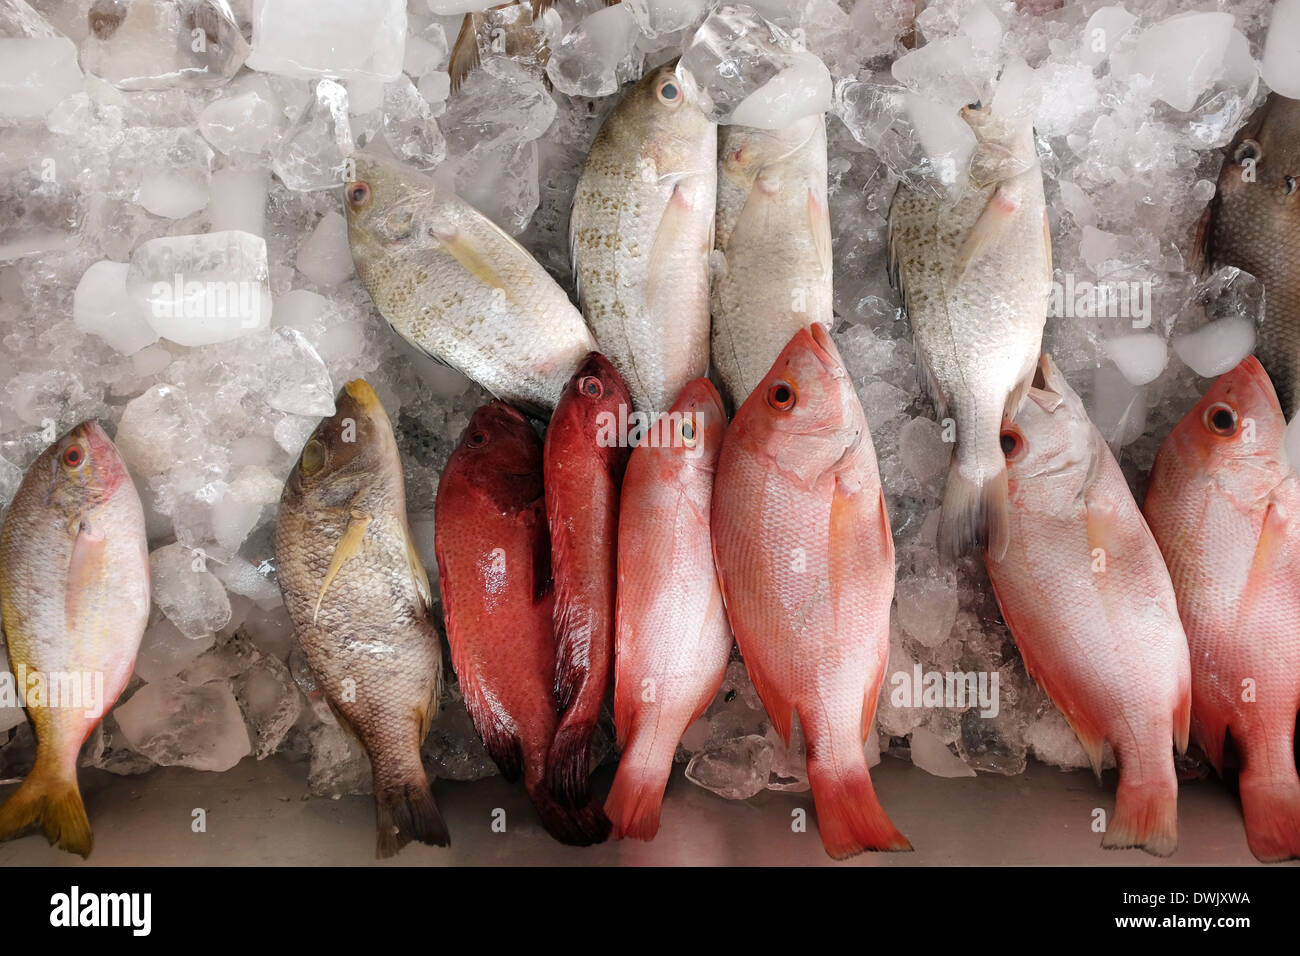 Fresh raw fish displayed on ice at supermarket Stock Photo